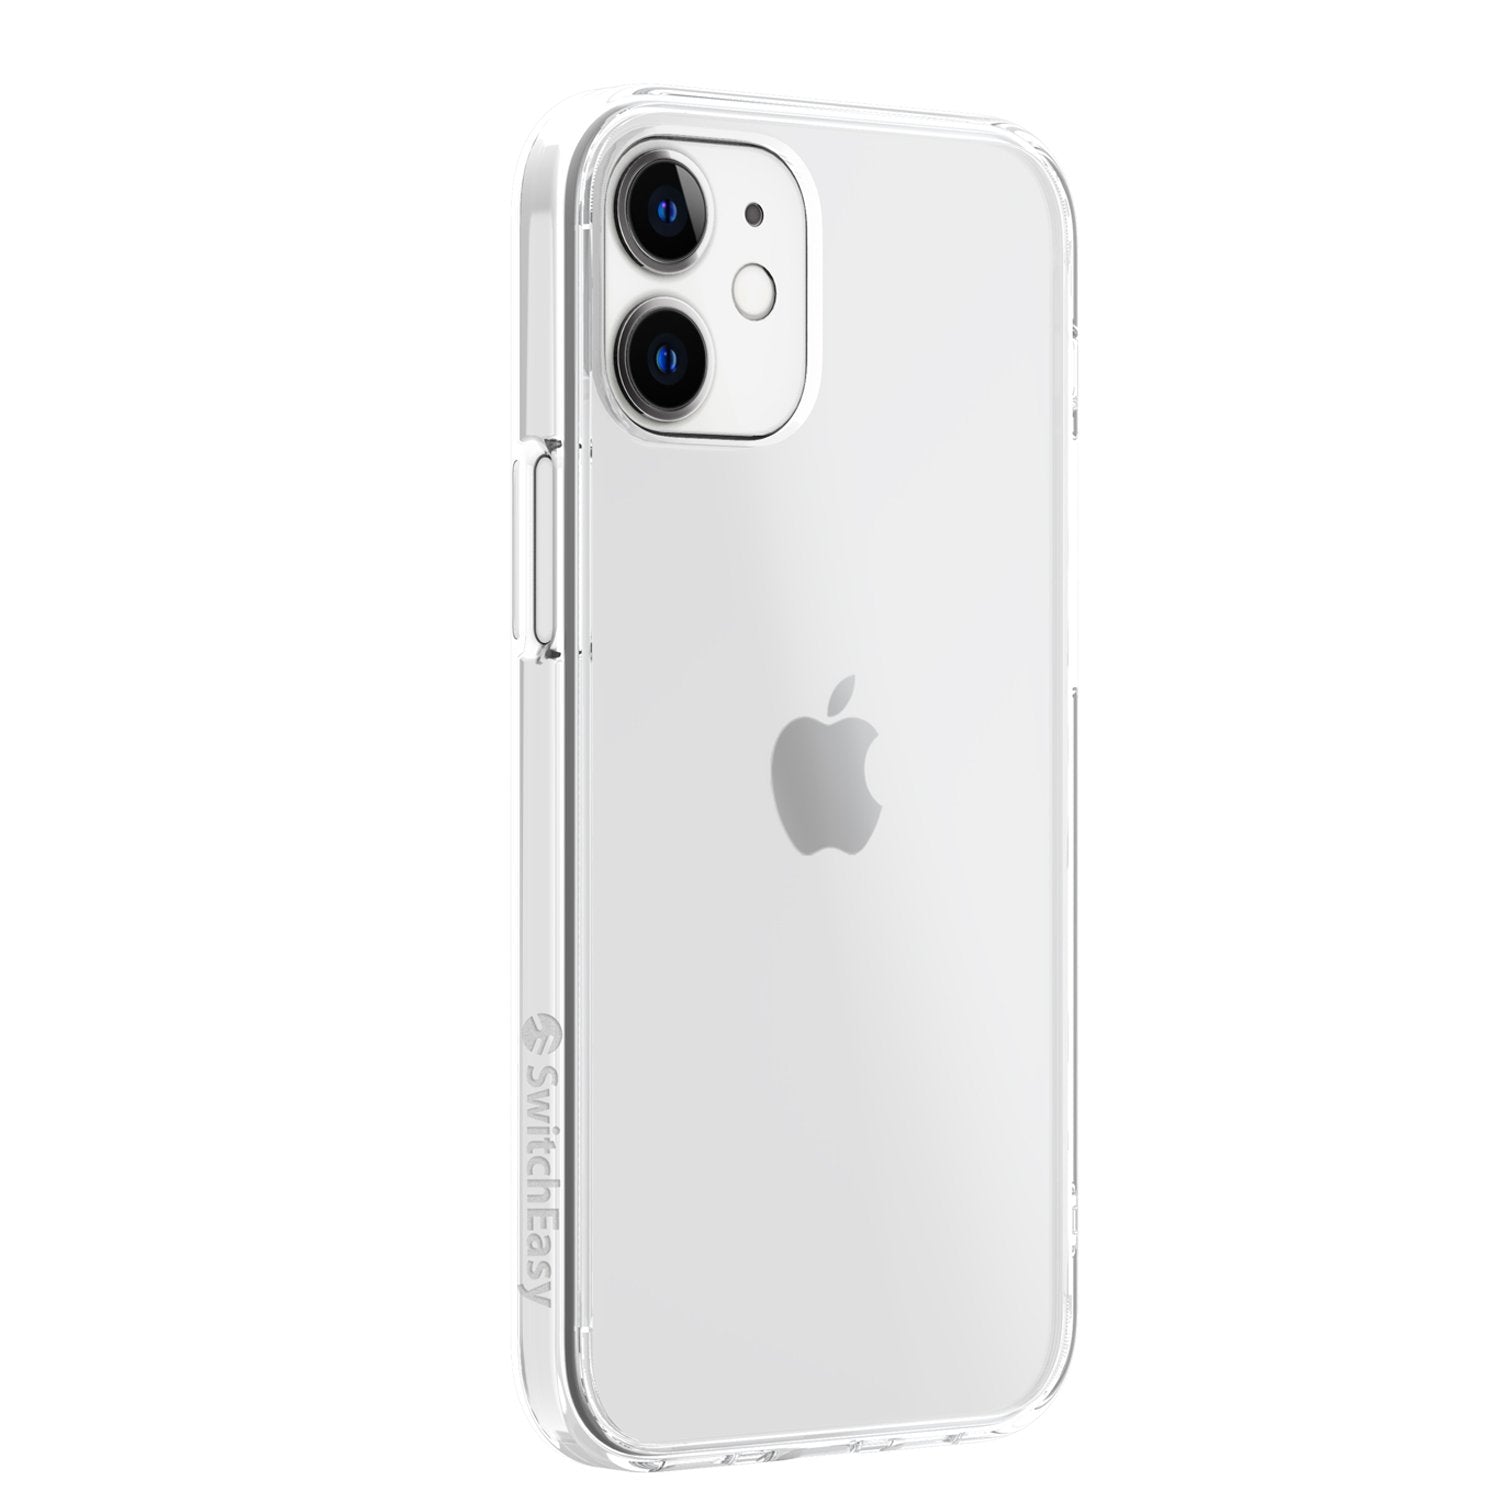 Switcheasy Crush Case for iPhone 12 mini 5.4"(2020), Transparent Default Switcheasy 